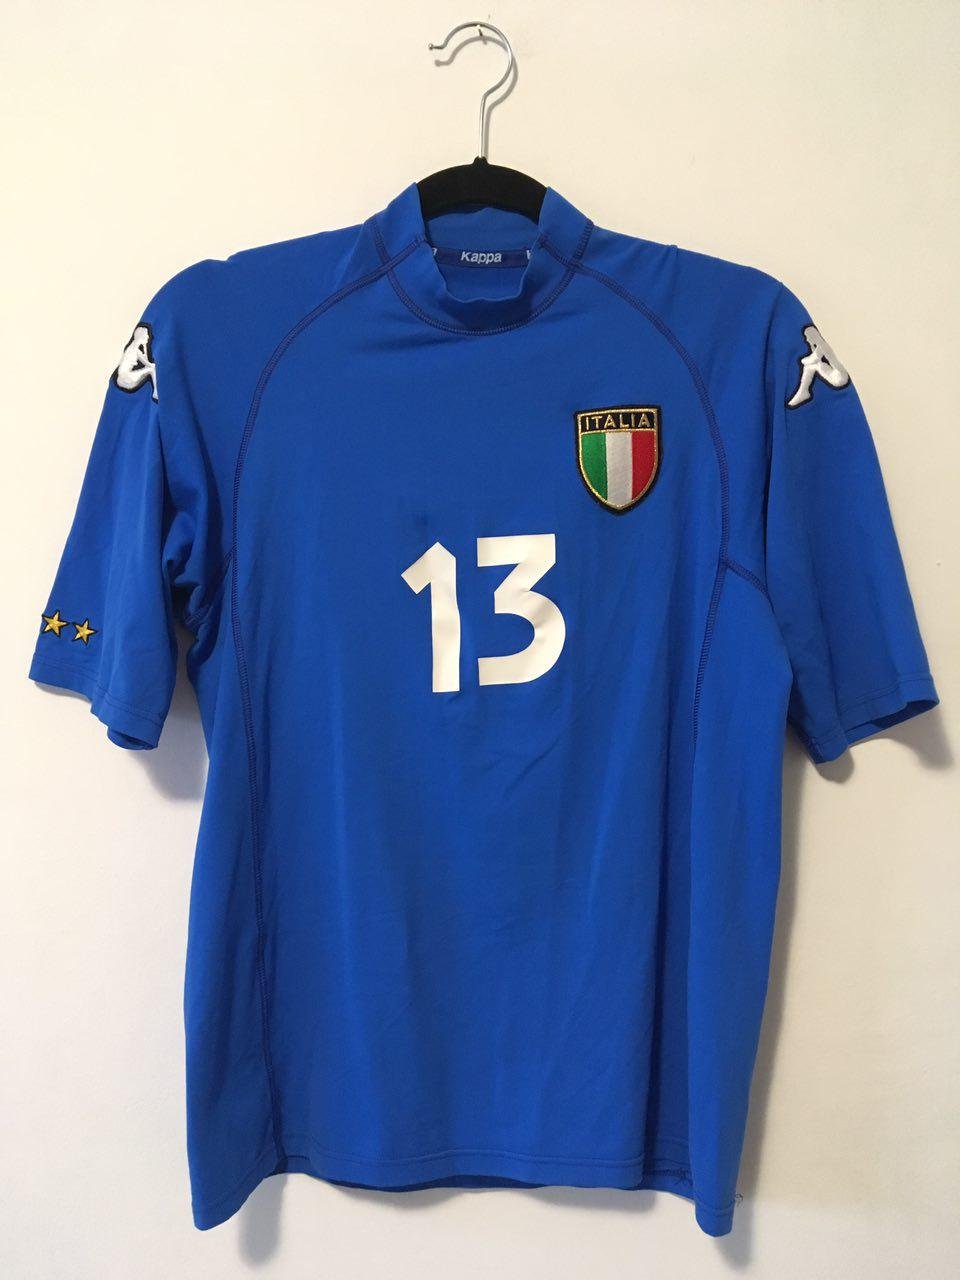 Set Flock Nameset away Trikot jersey shirt Maglia Italia Italy Italien 2000 